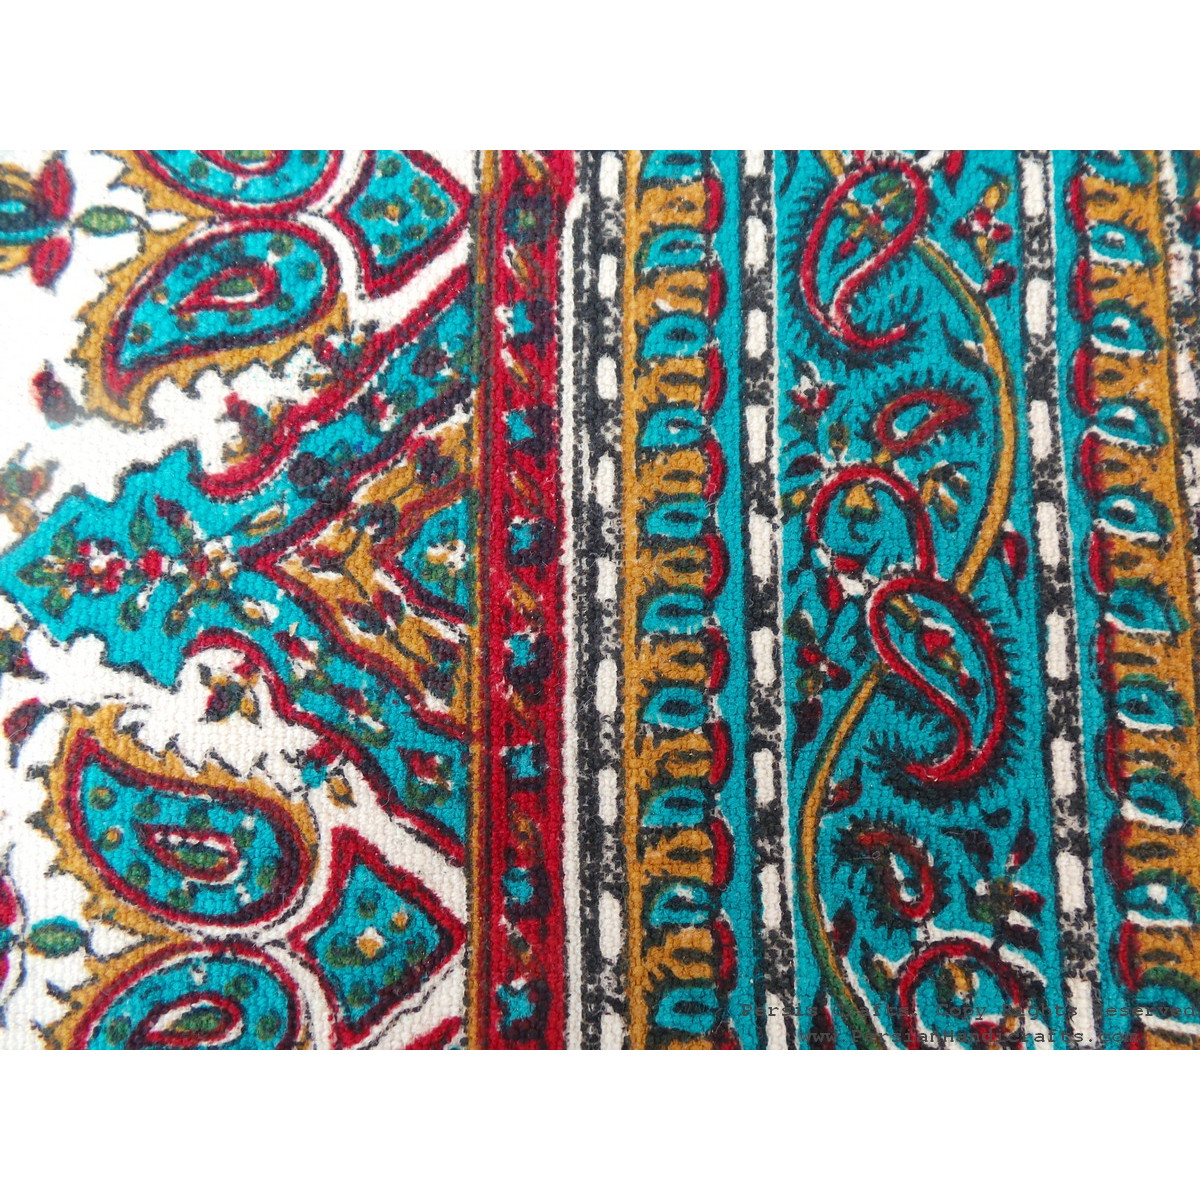 Persian Tapestry (Ghalamkar) Tablecloth - HGH3608-Persian Handicrafts